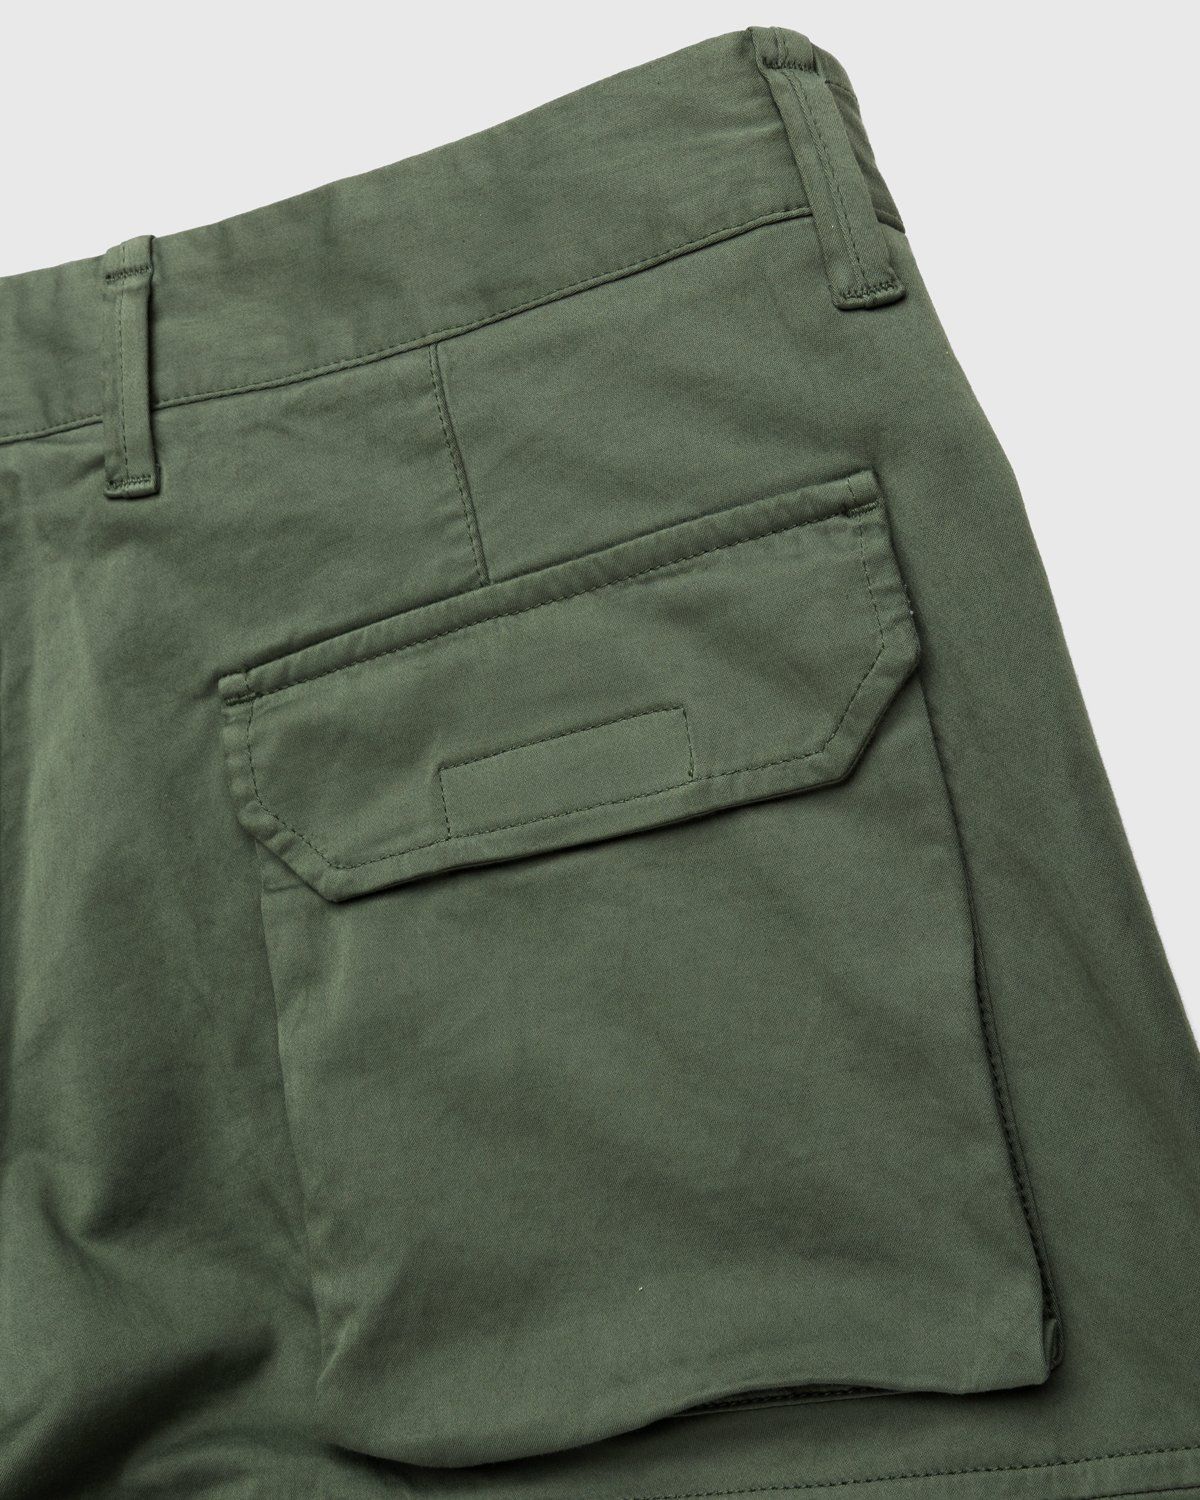 Stone Island – Pants Green - Cargo Pants - Green - Image 3